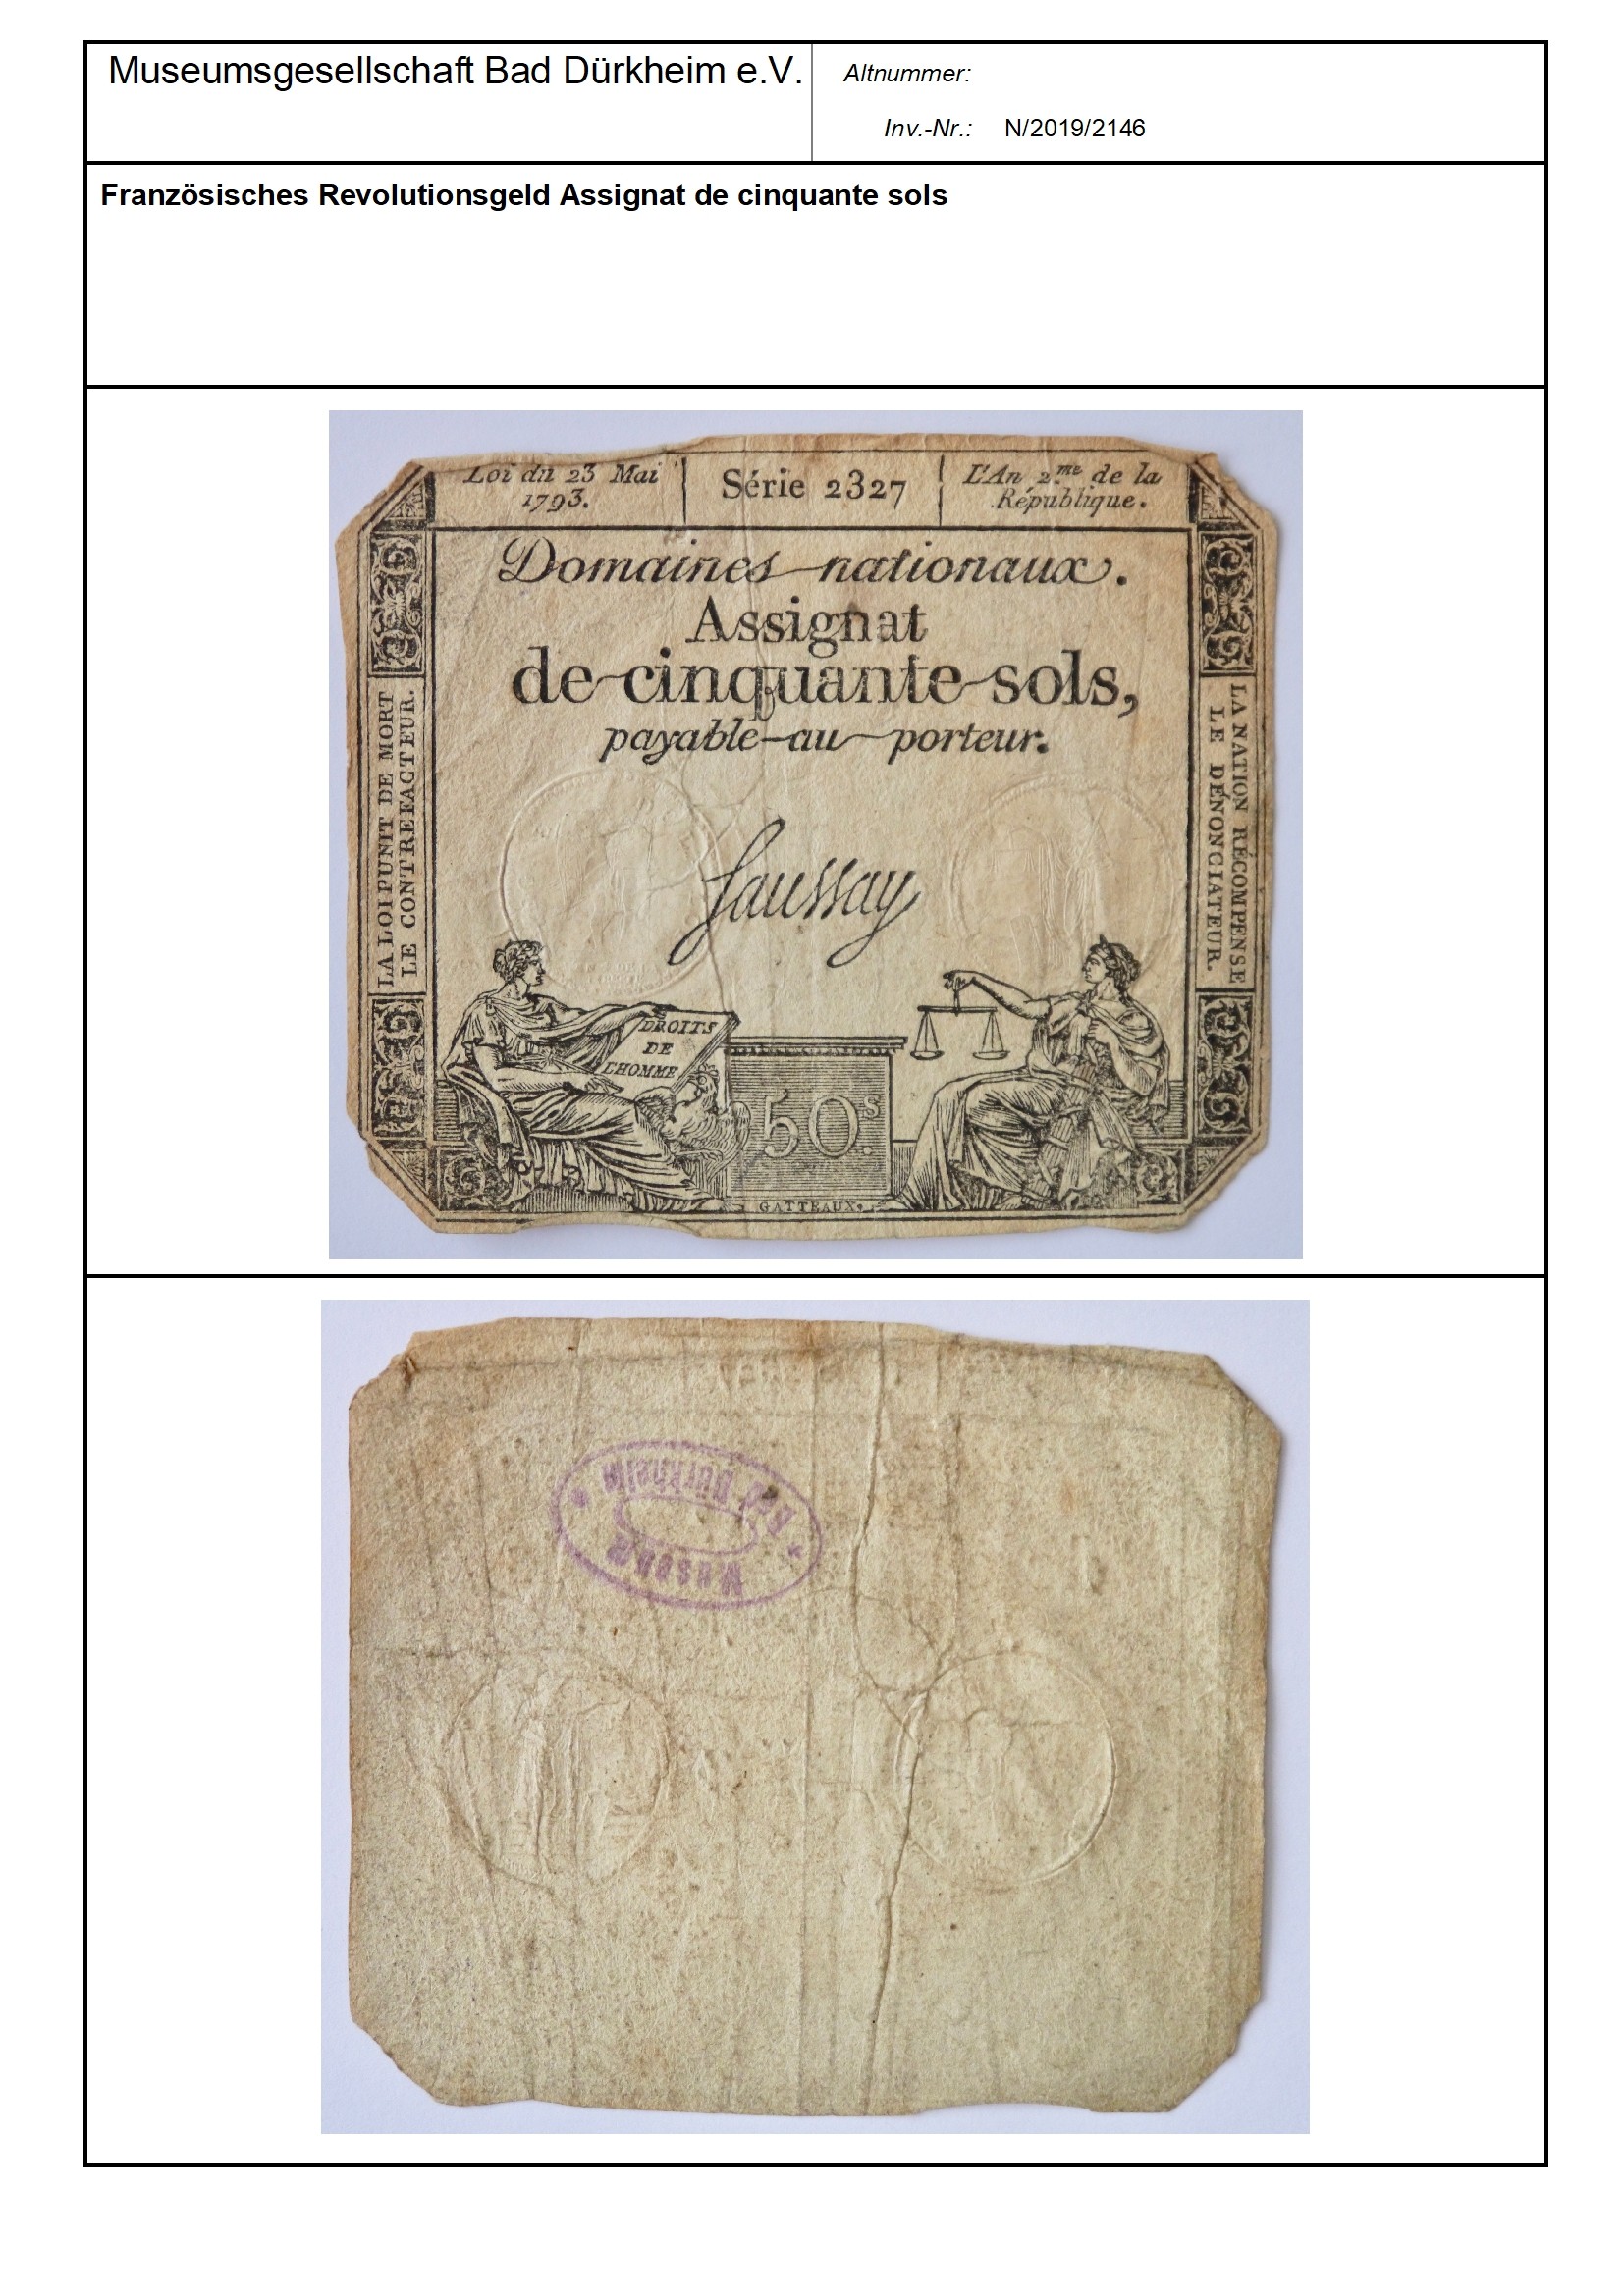 Französisches Revolutionsgeld Assignat de cinquante sols
Serien-Nummer: Série 2327 (Museumsgesellschaft Bad Dürkheim e.V. CC BY-NC-SA)